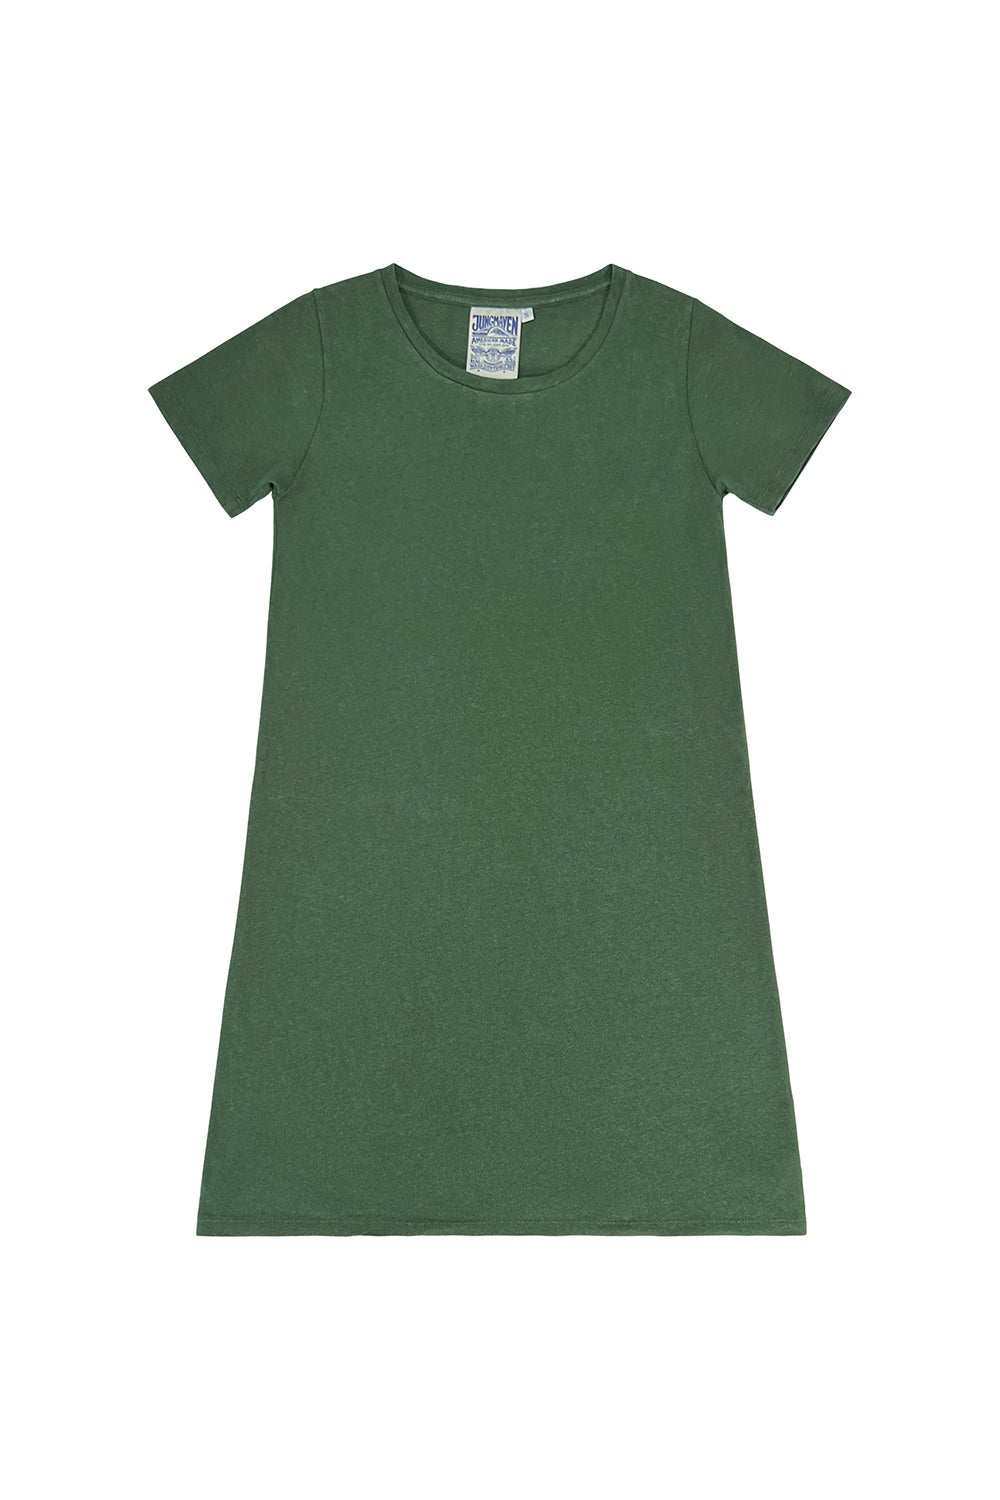 Rae Line Dress | Jungmaven Hemp Clothing & Accessories / Color: Hunter Green